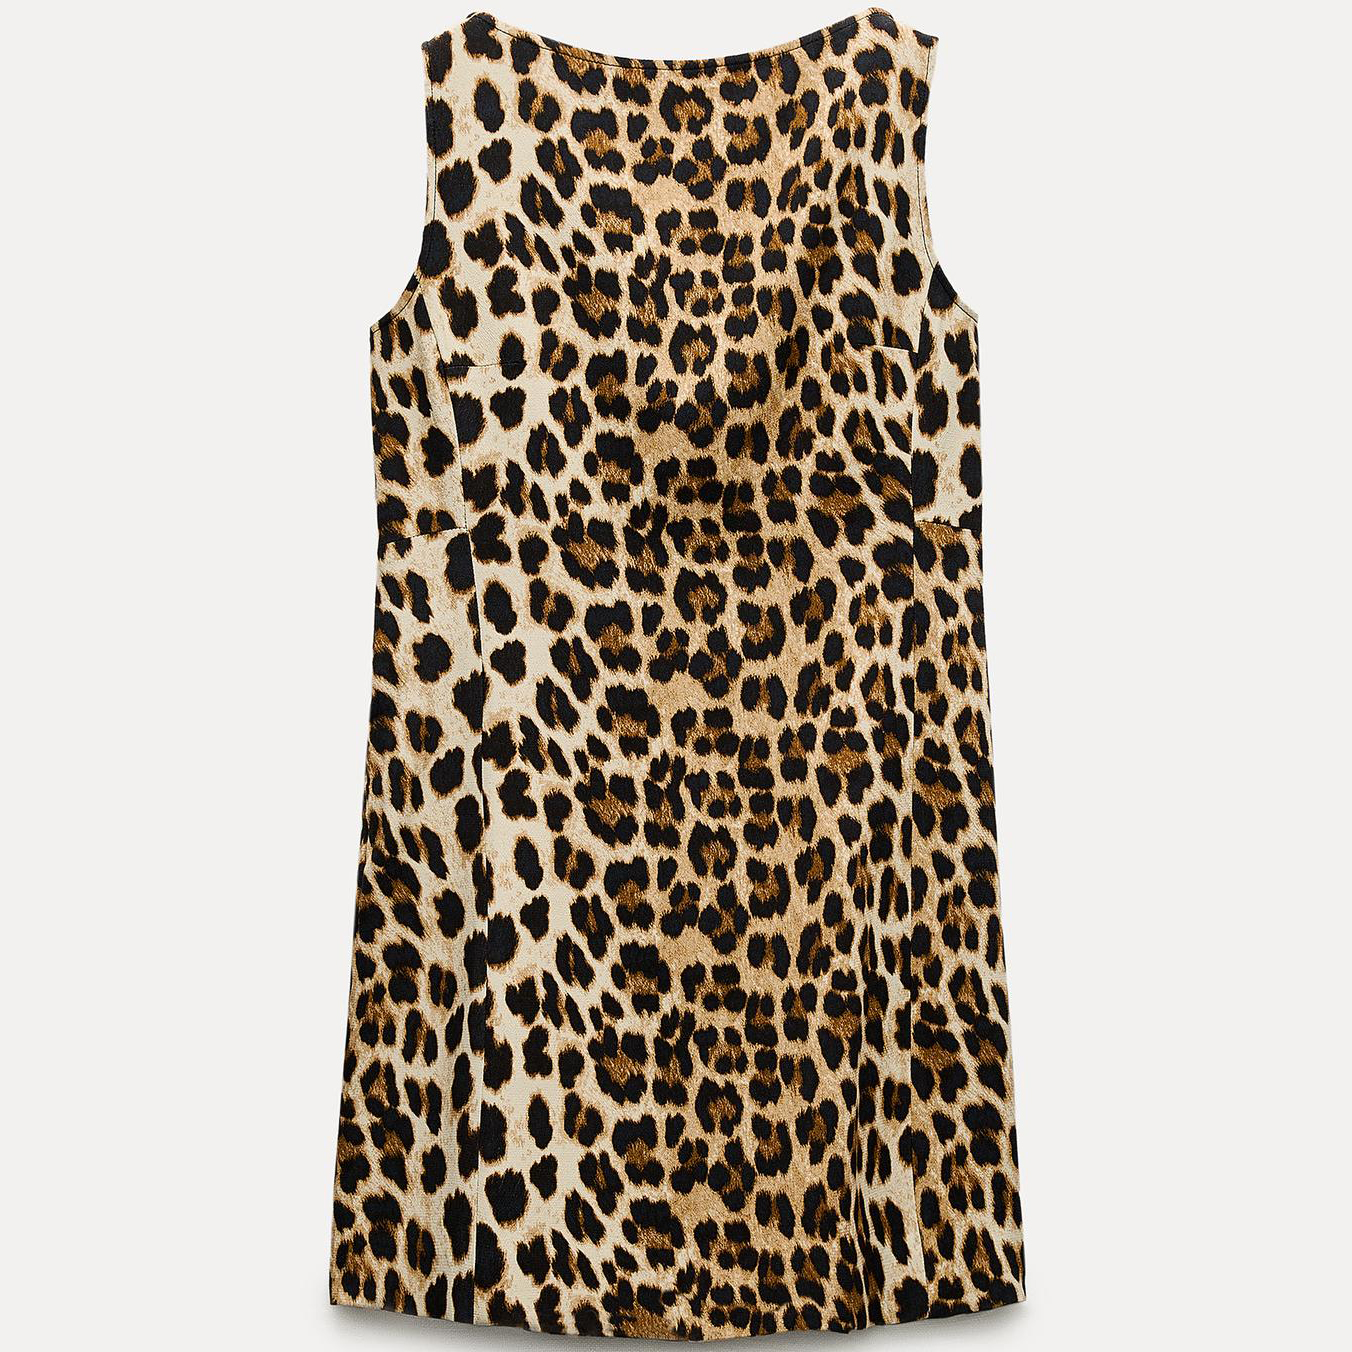 Платье Zara ZW Collection Leopard Animal Print, коричневый/мультиколор платье zara zw collection floral print мультиколор